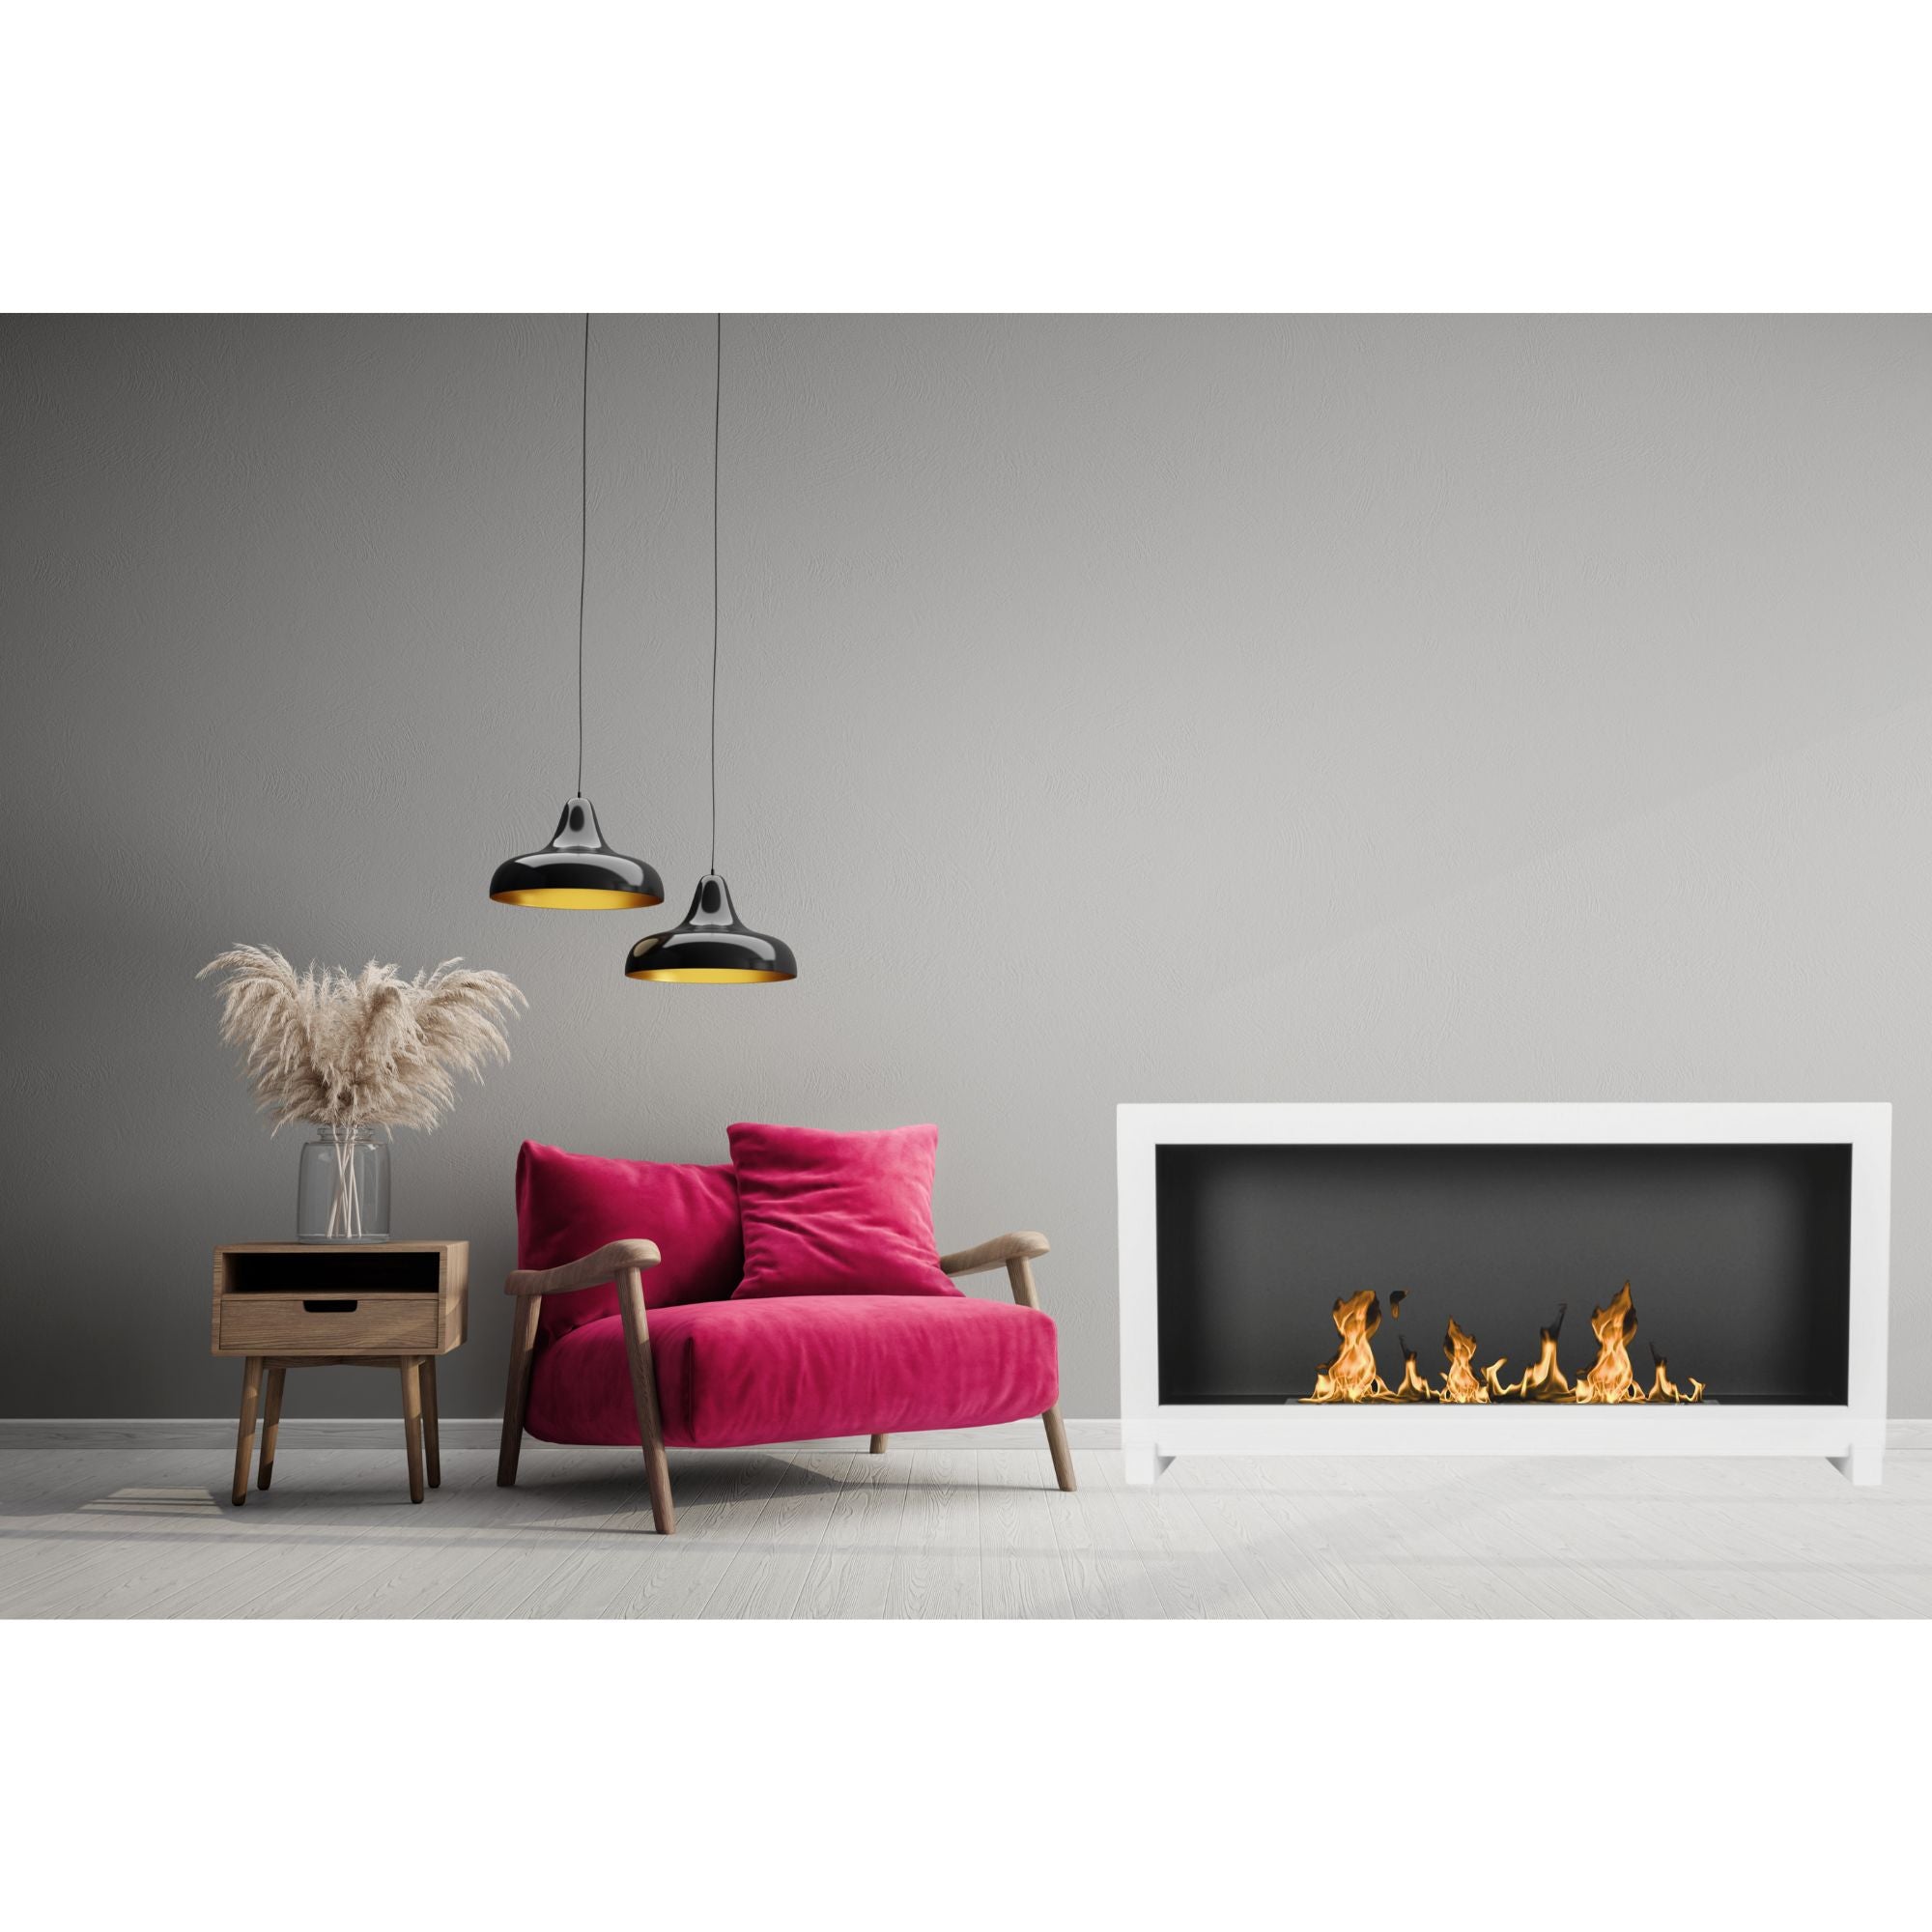 S - Line White Full BOX Wall Fireplace - Freestanding Bio-Ethanol 90 x 40 CM